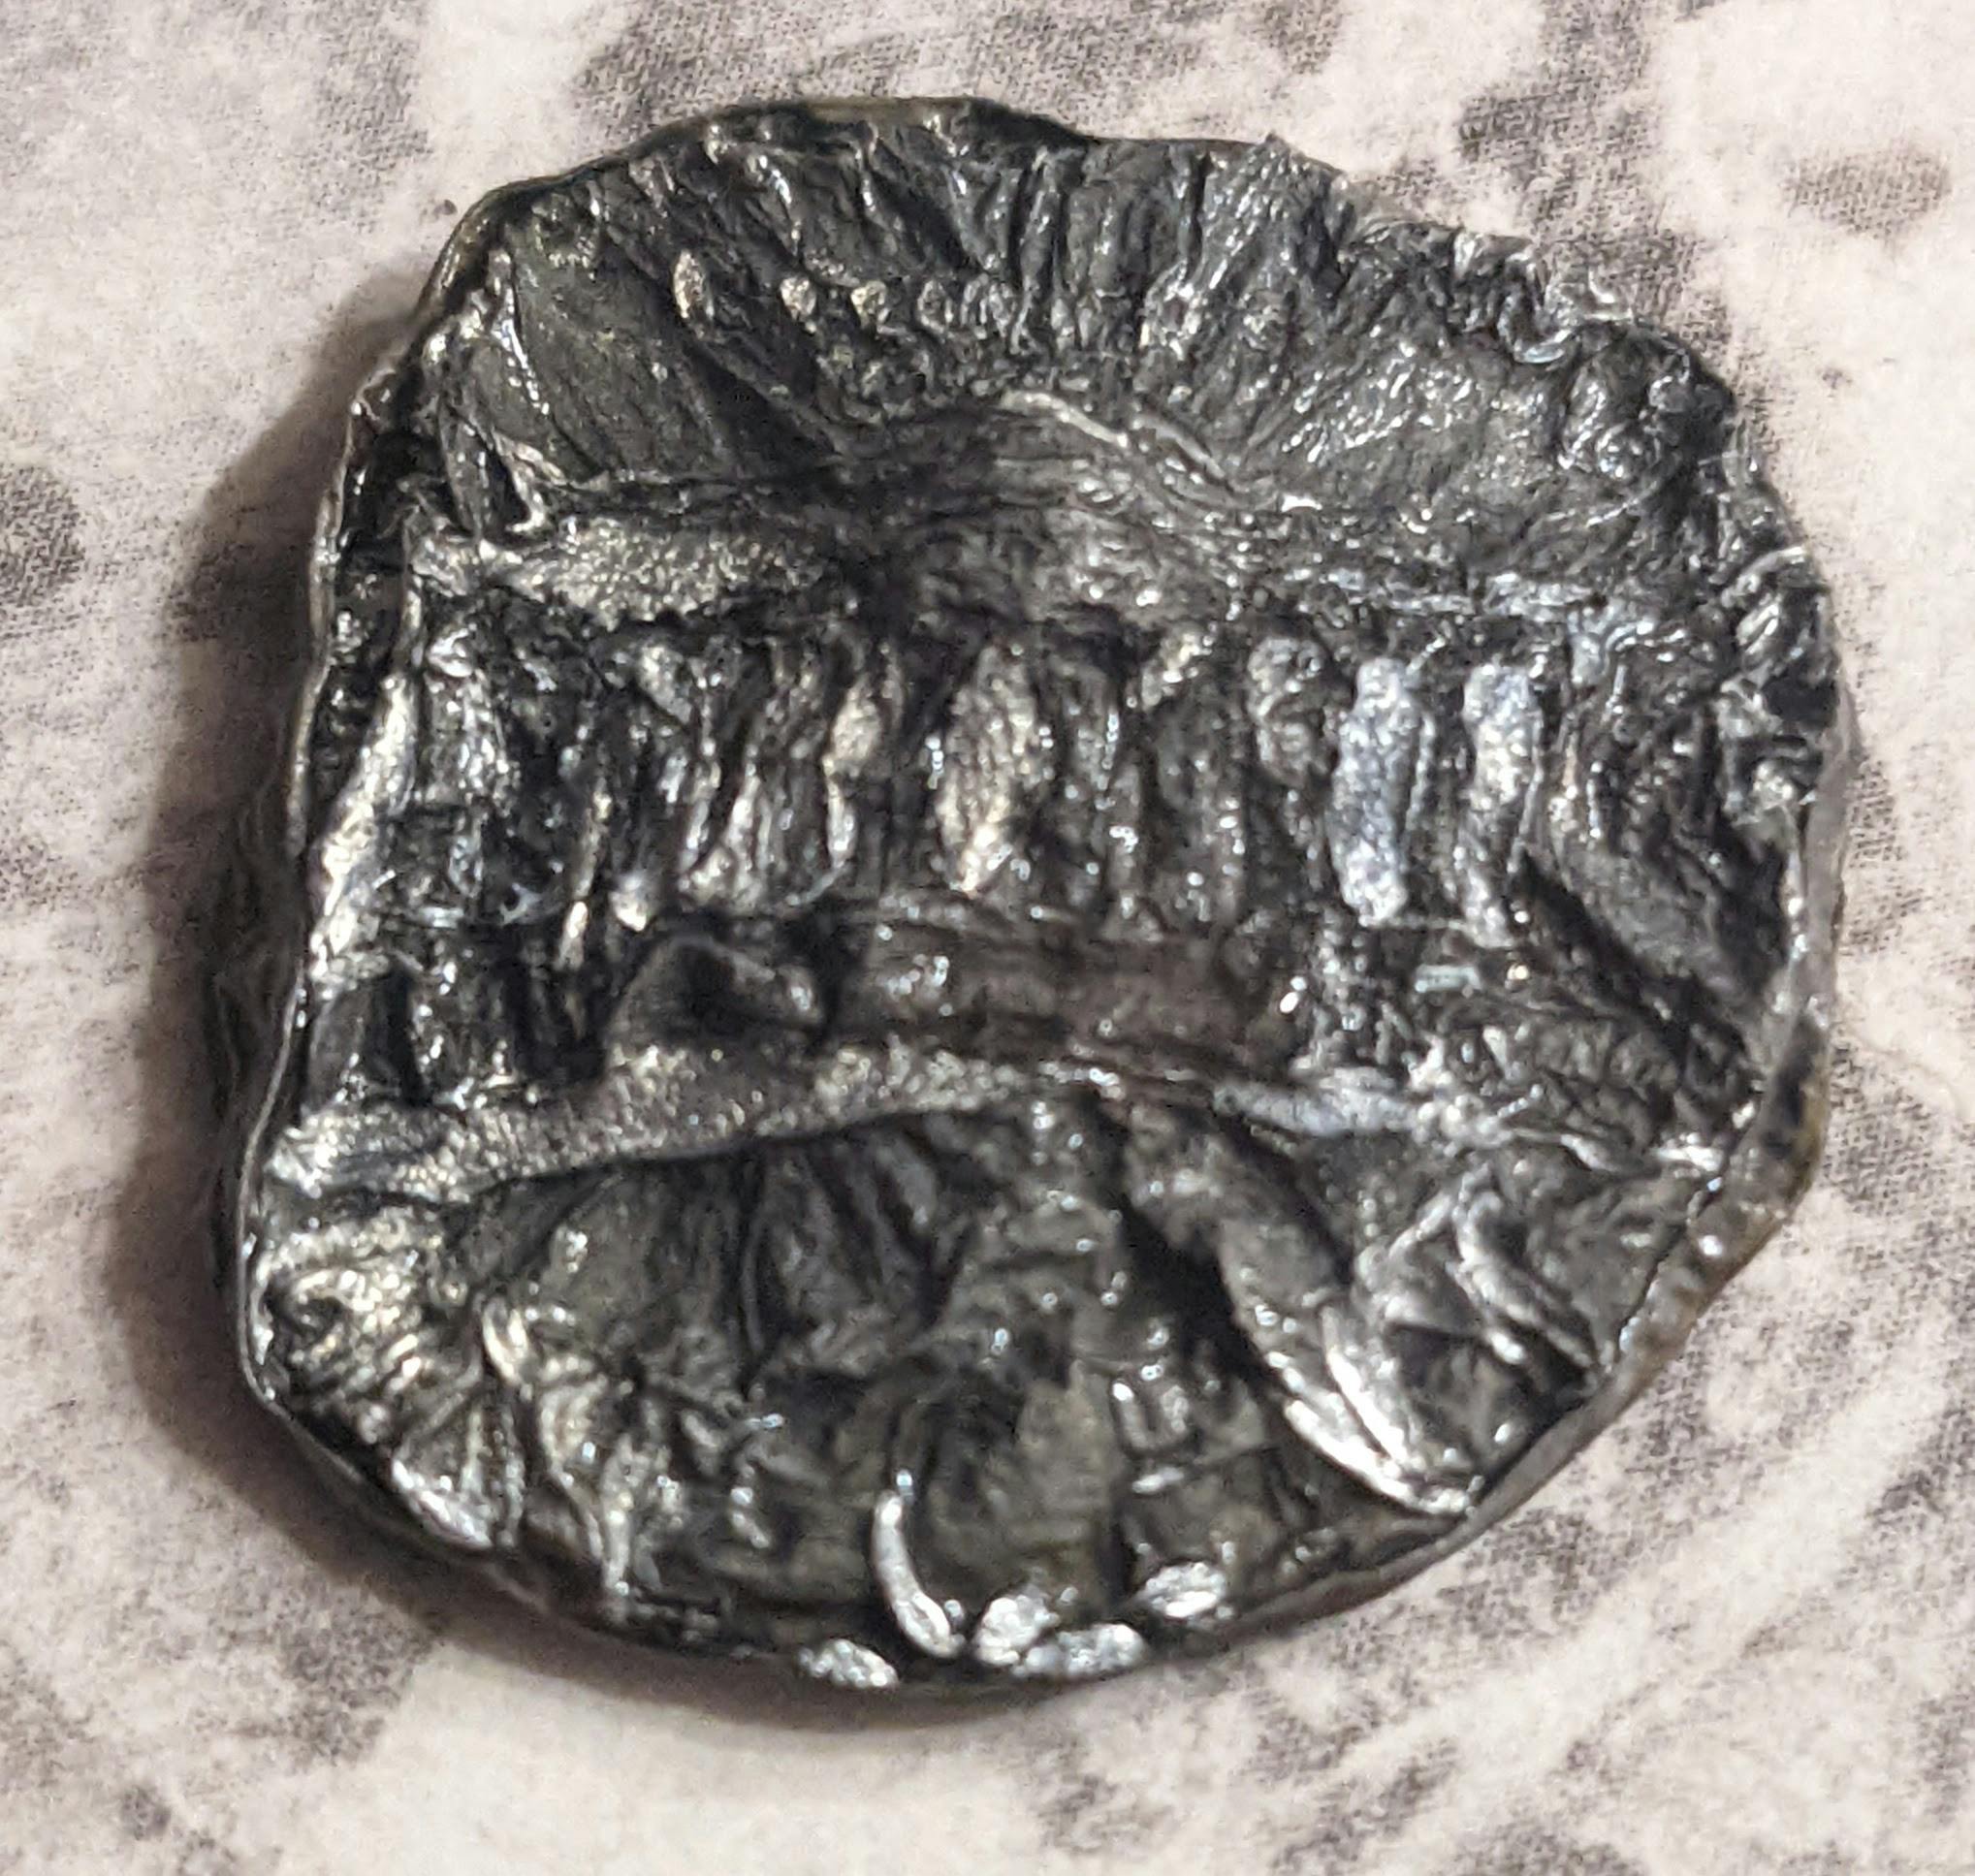 A burnt penny.